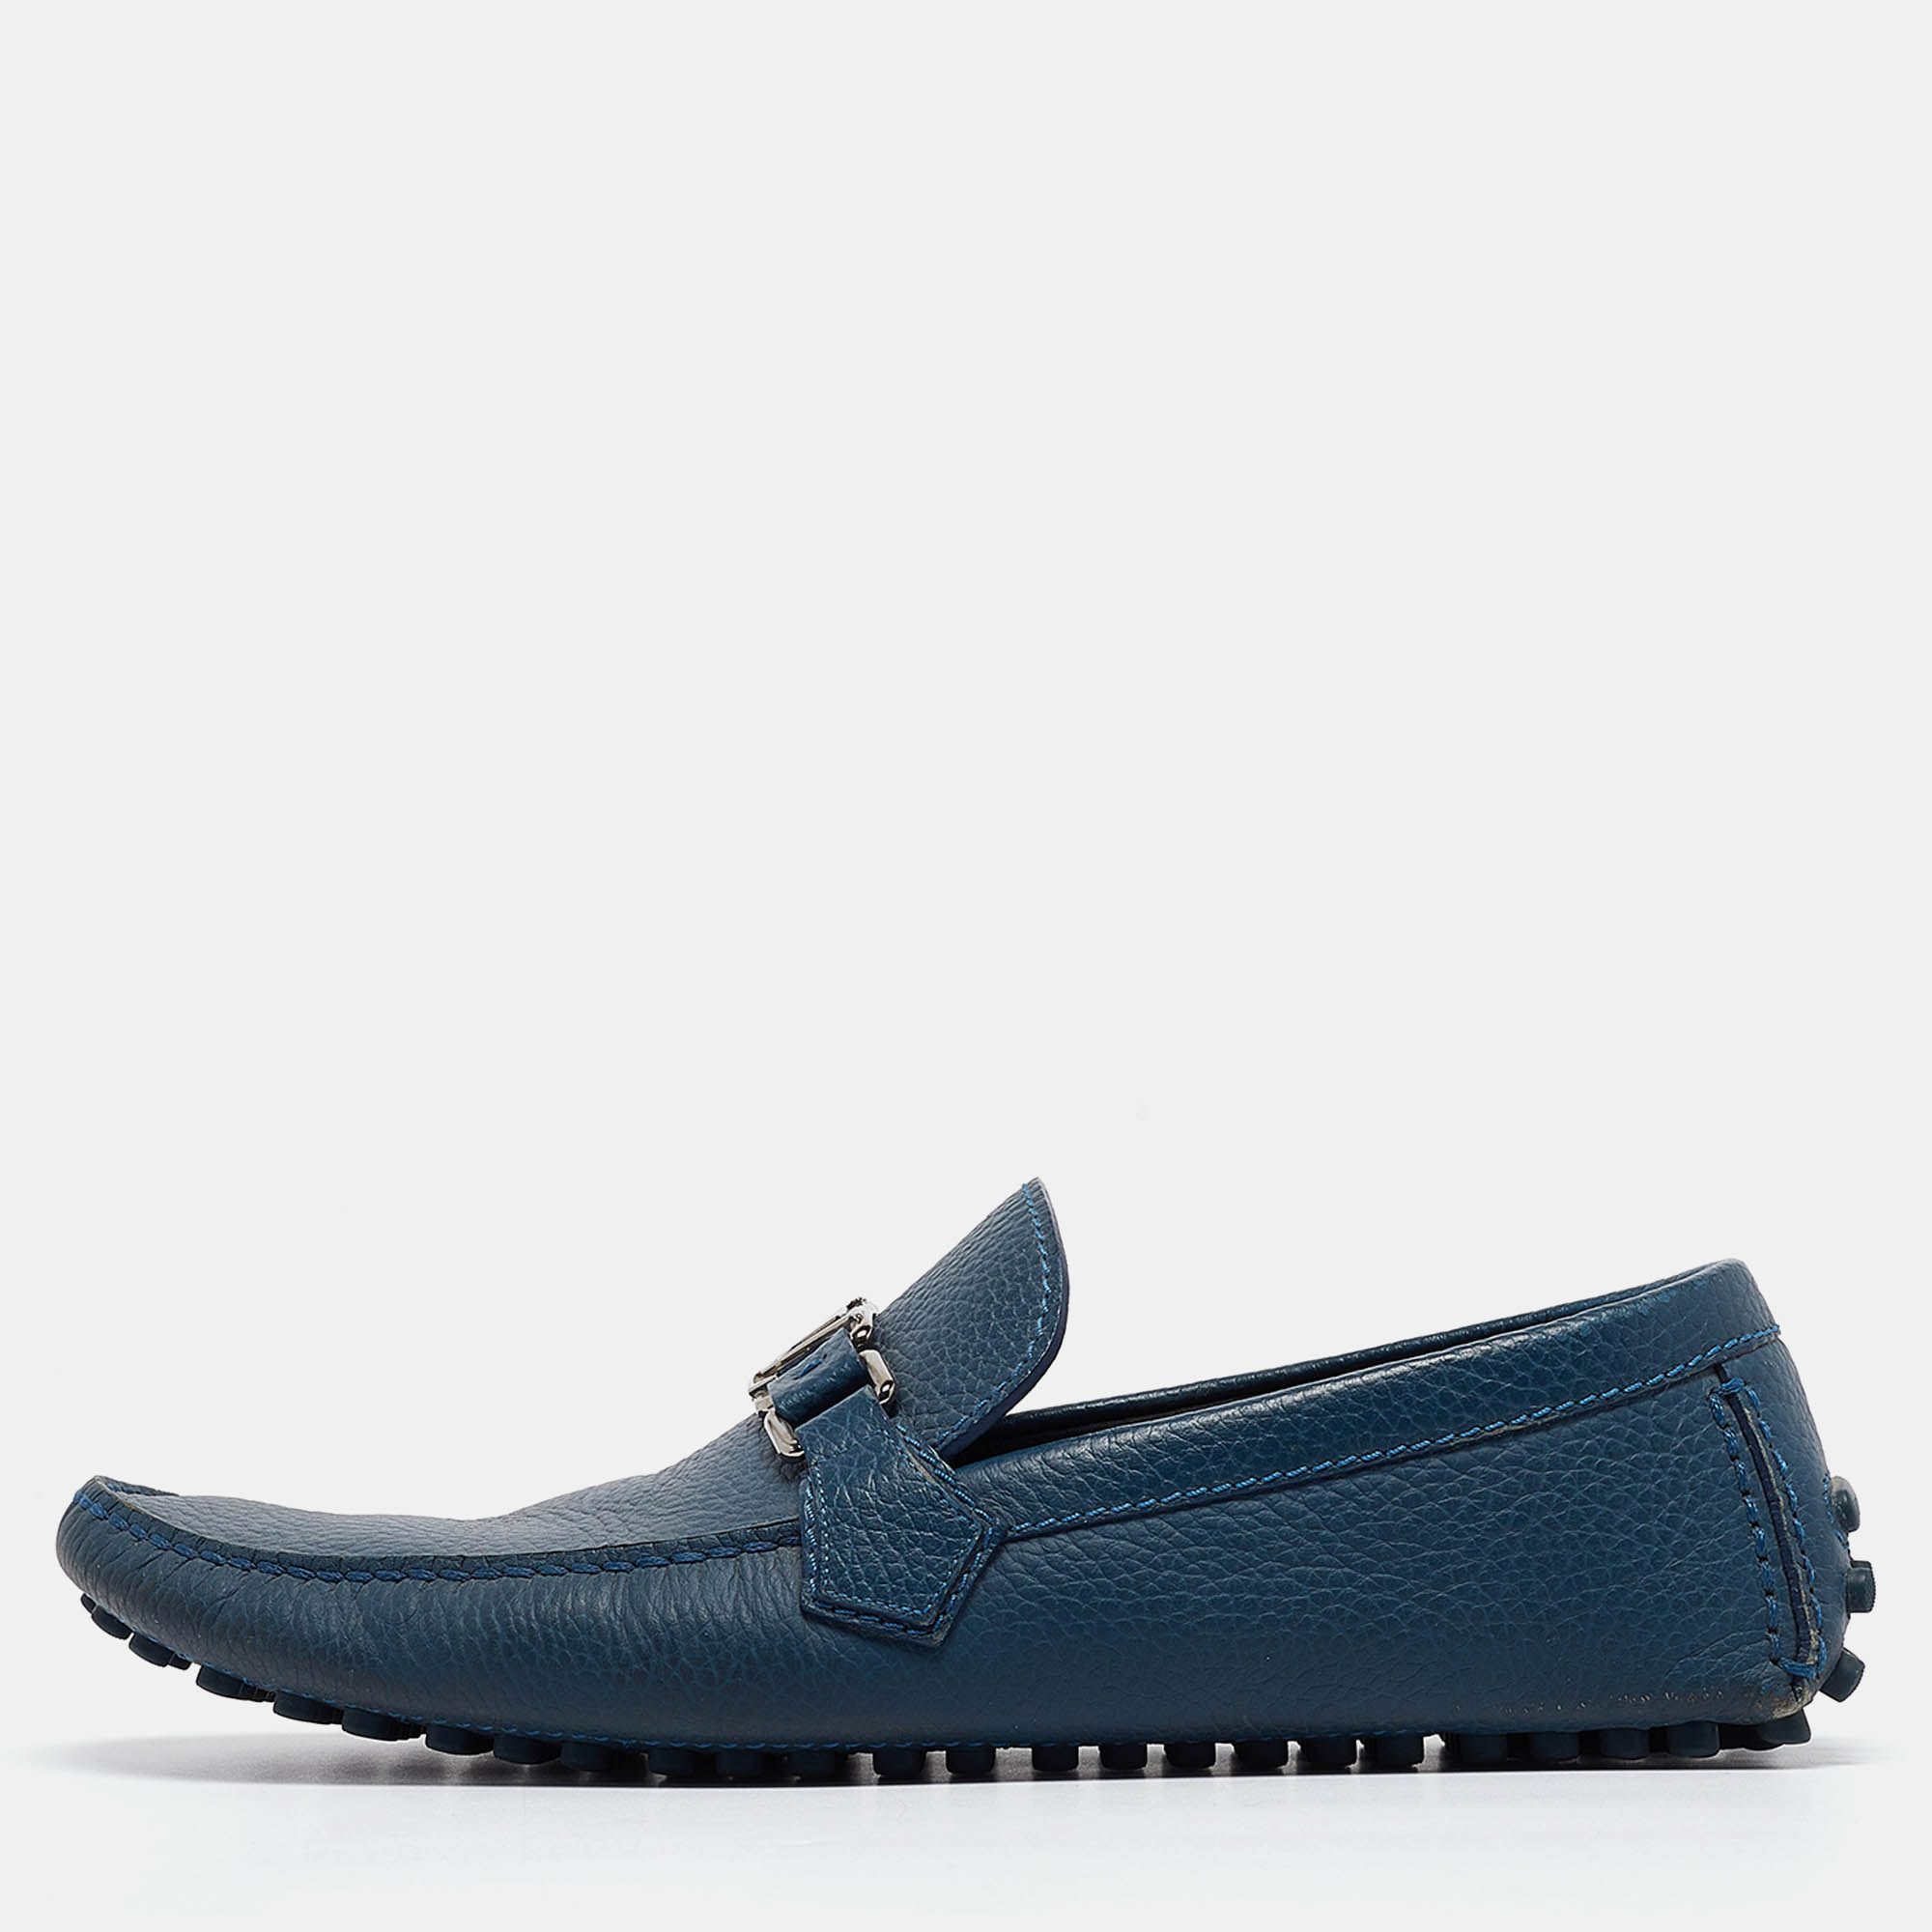 Louis vuitton blue leather hockenheim loafers size 43